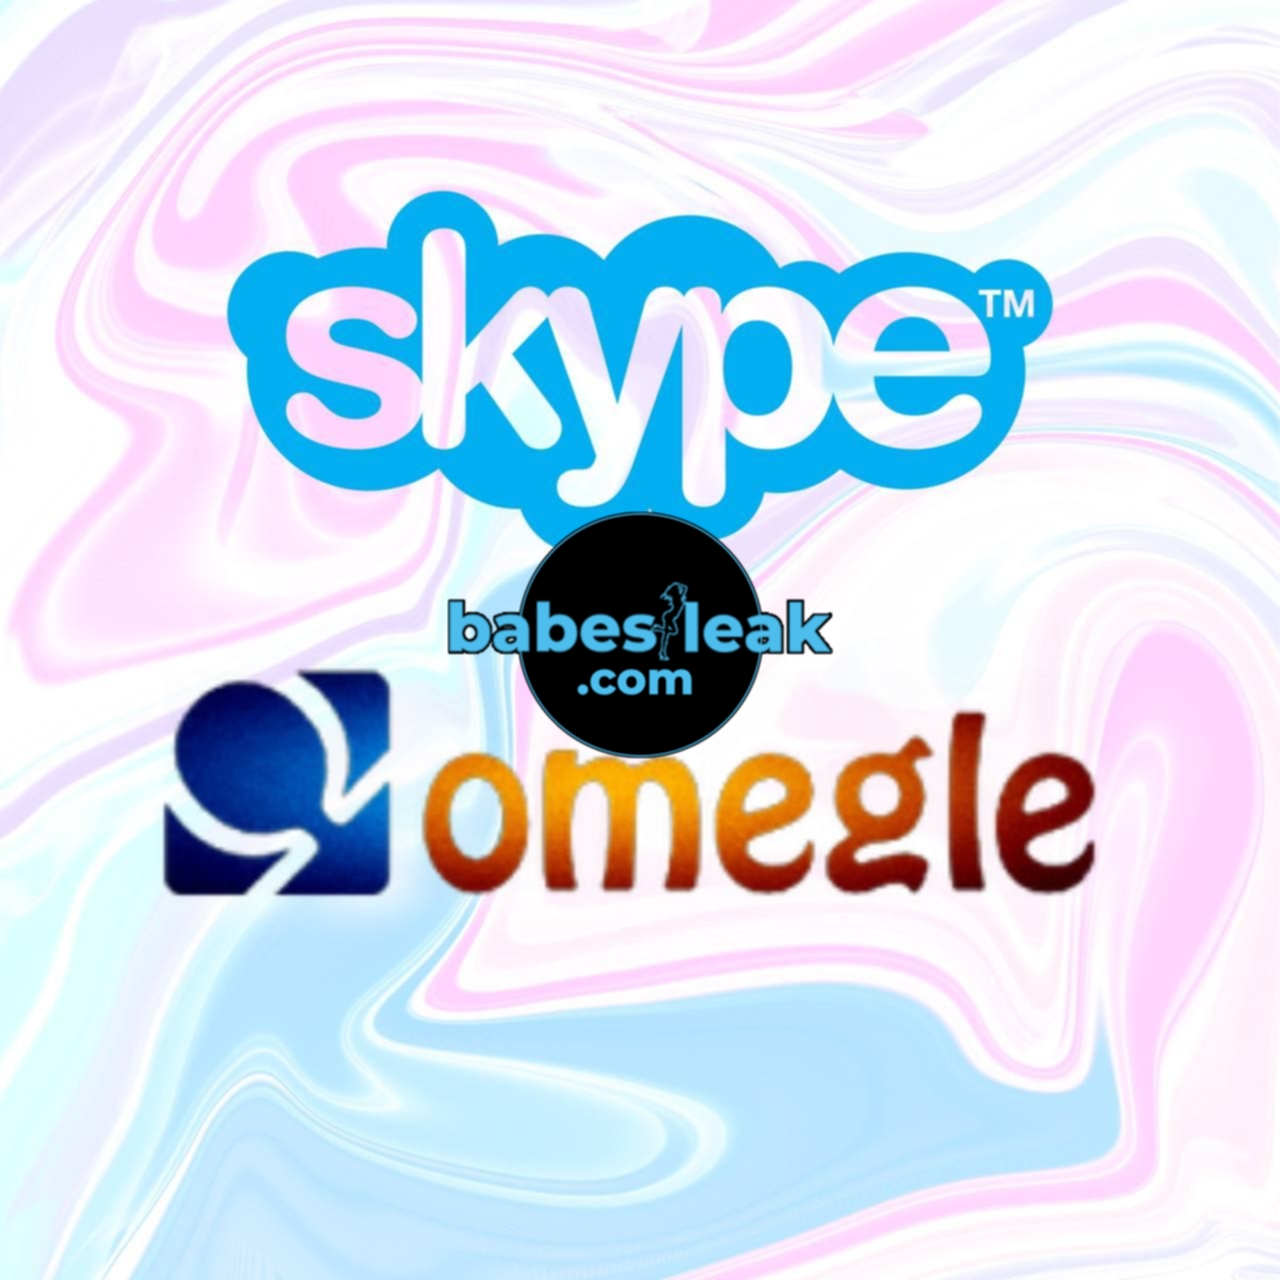 omegle skype leak